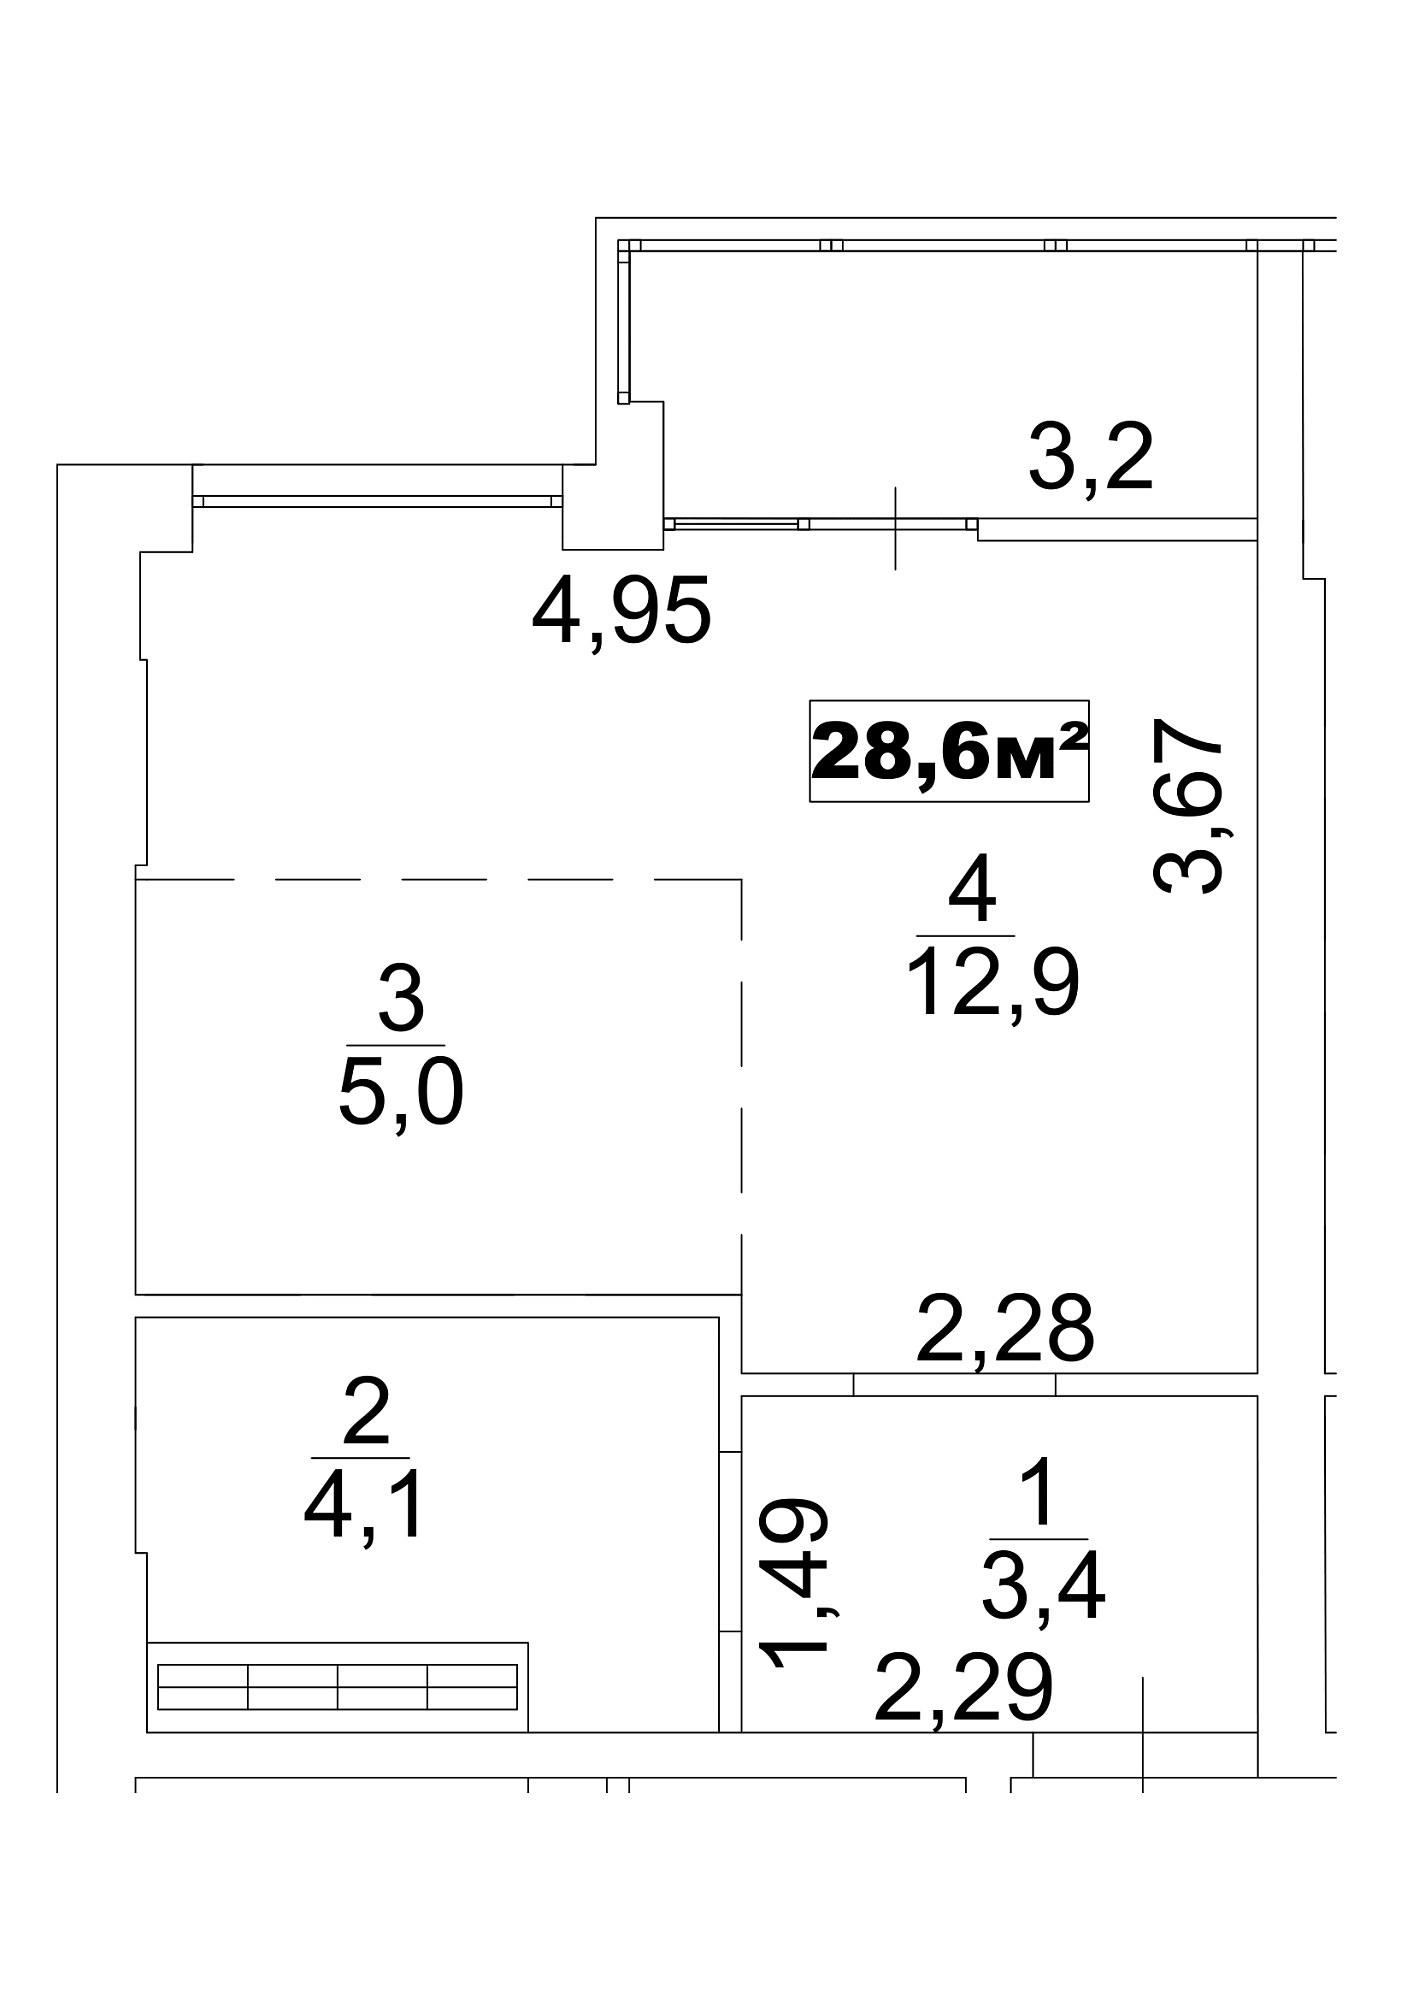 Планировка Smart-квартира площей 28.6м2, AB-13-08/0063б.